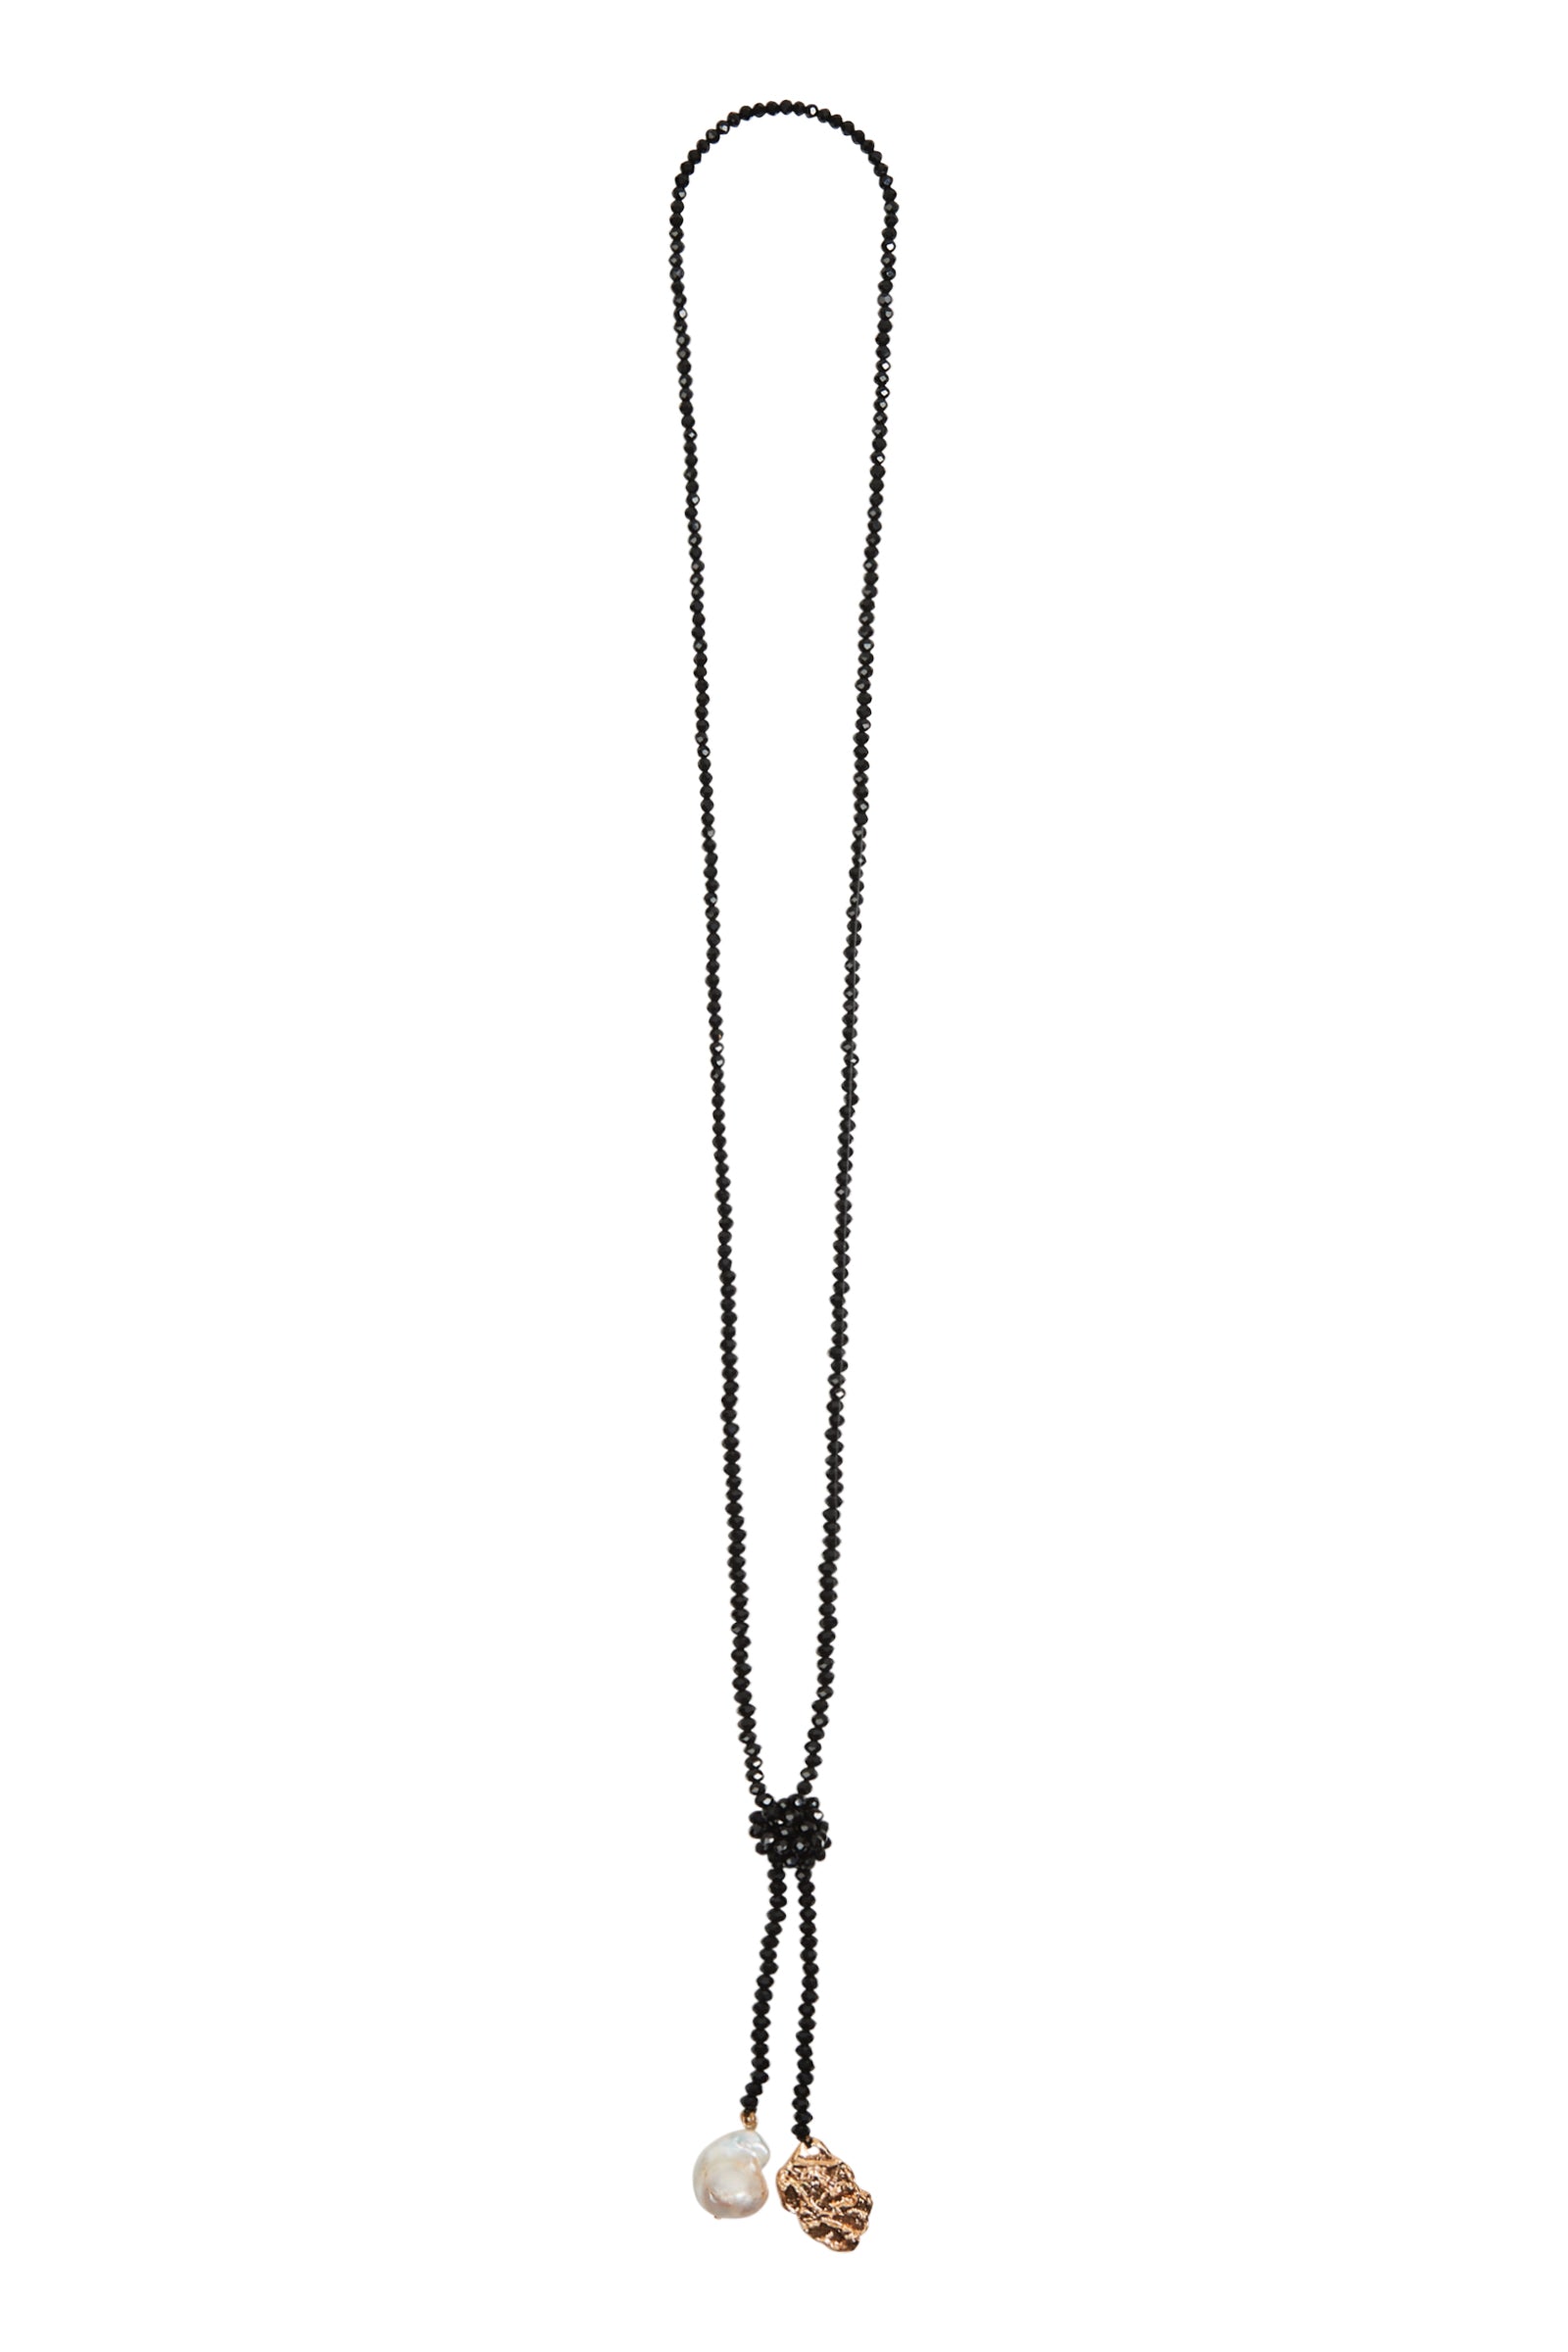 Irula Necklace - Pearl Drop - eb&ive Necklace